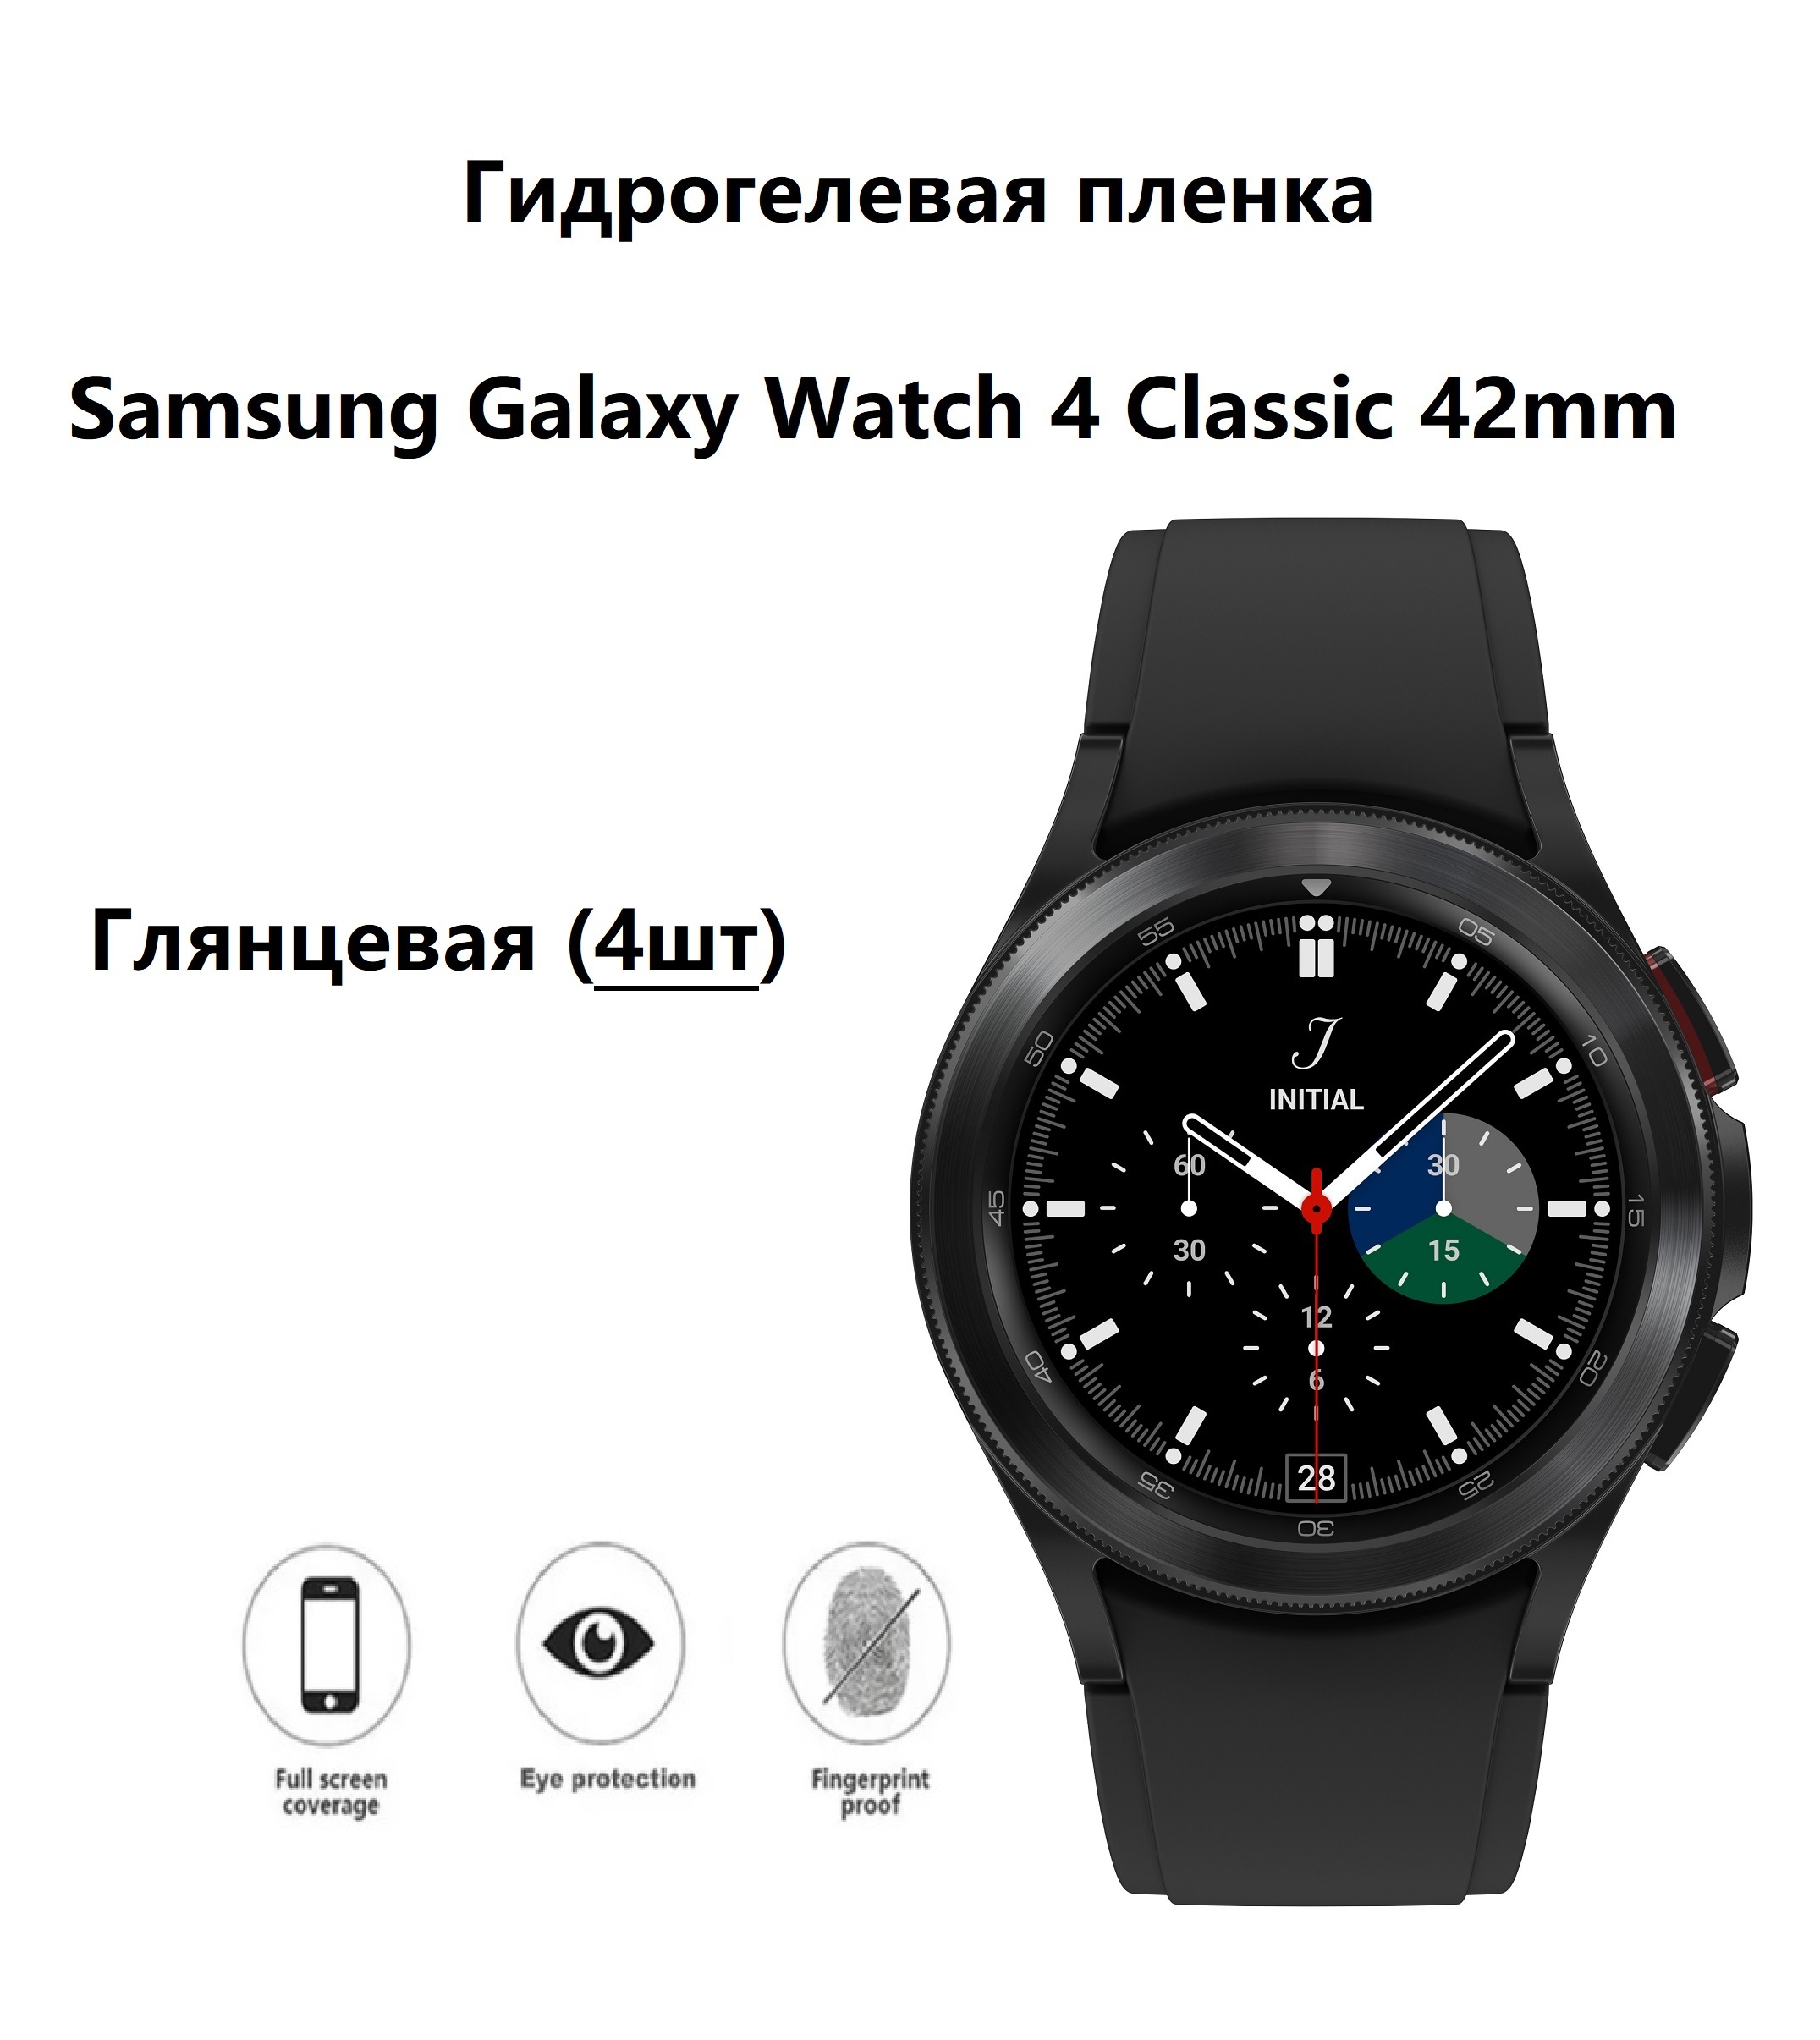 Samsung watch classic 42mm. Галакси вотч 4 Классик. Галакси вотч 4 Классик 42 мм. Samsung watch 4 Classic 42mm. Galaxy watch Classic 42mm.